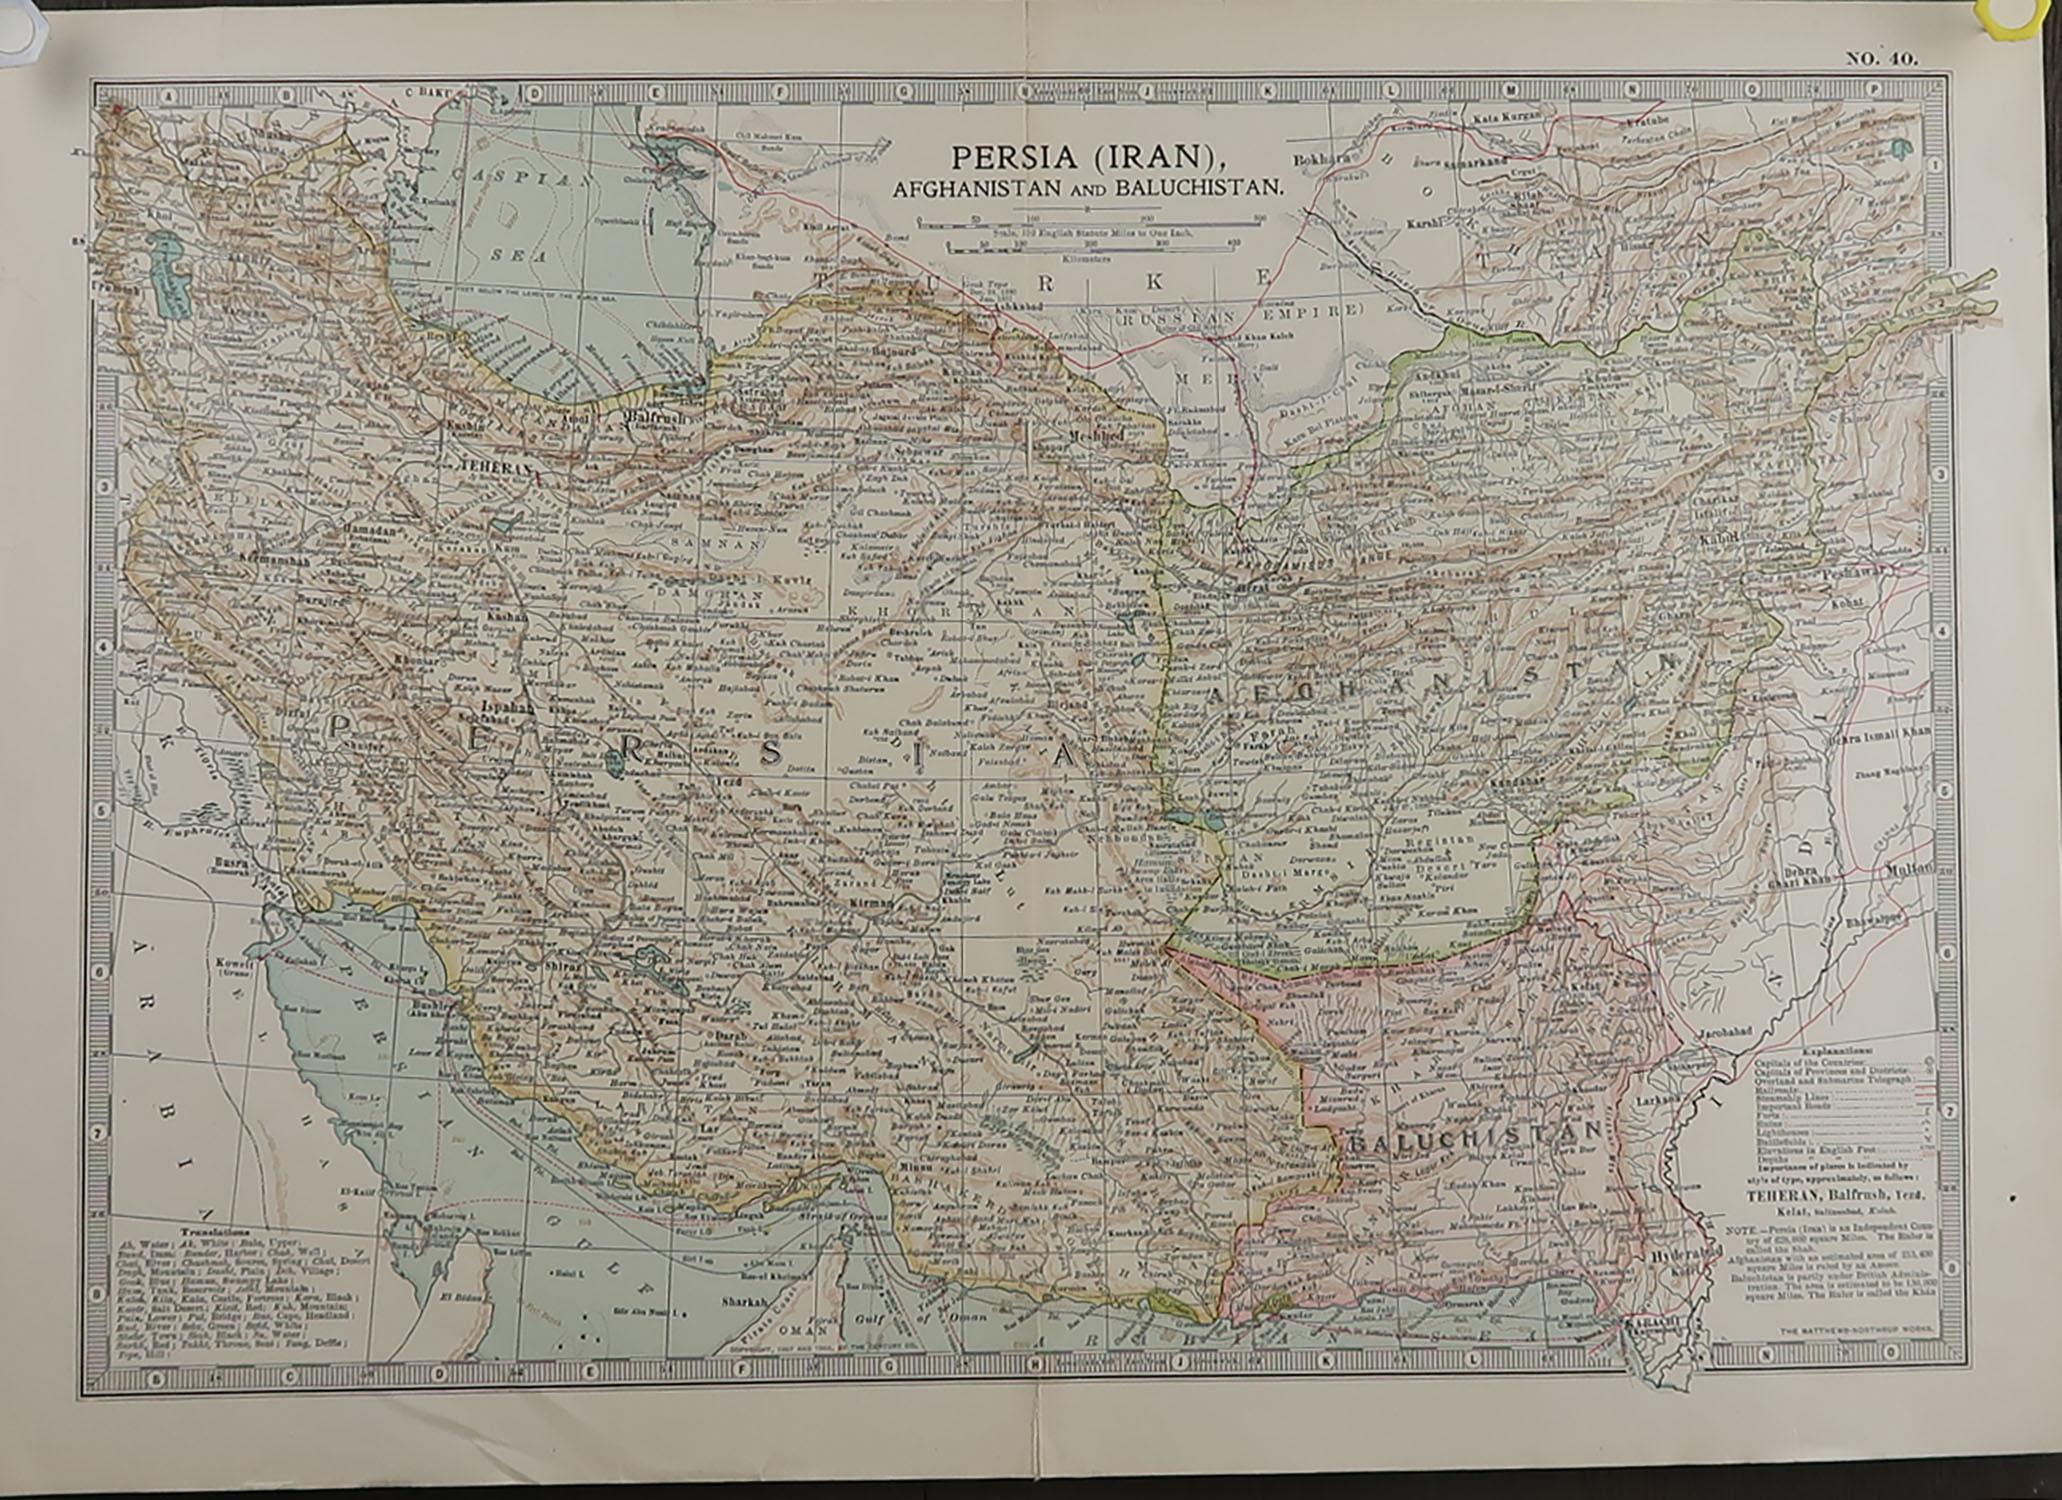 Other Original Antique Map of Persia 'Iran', circa 1890